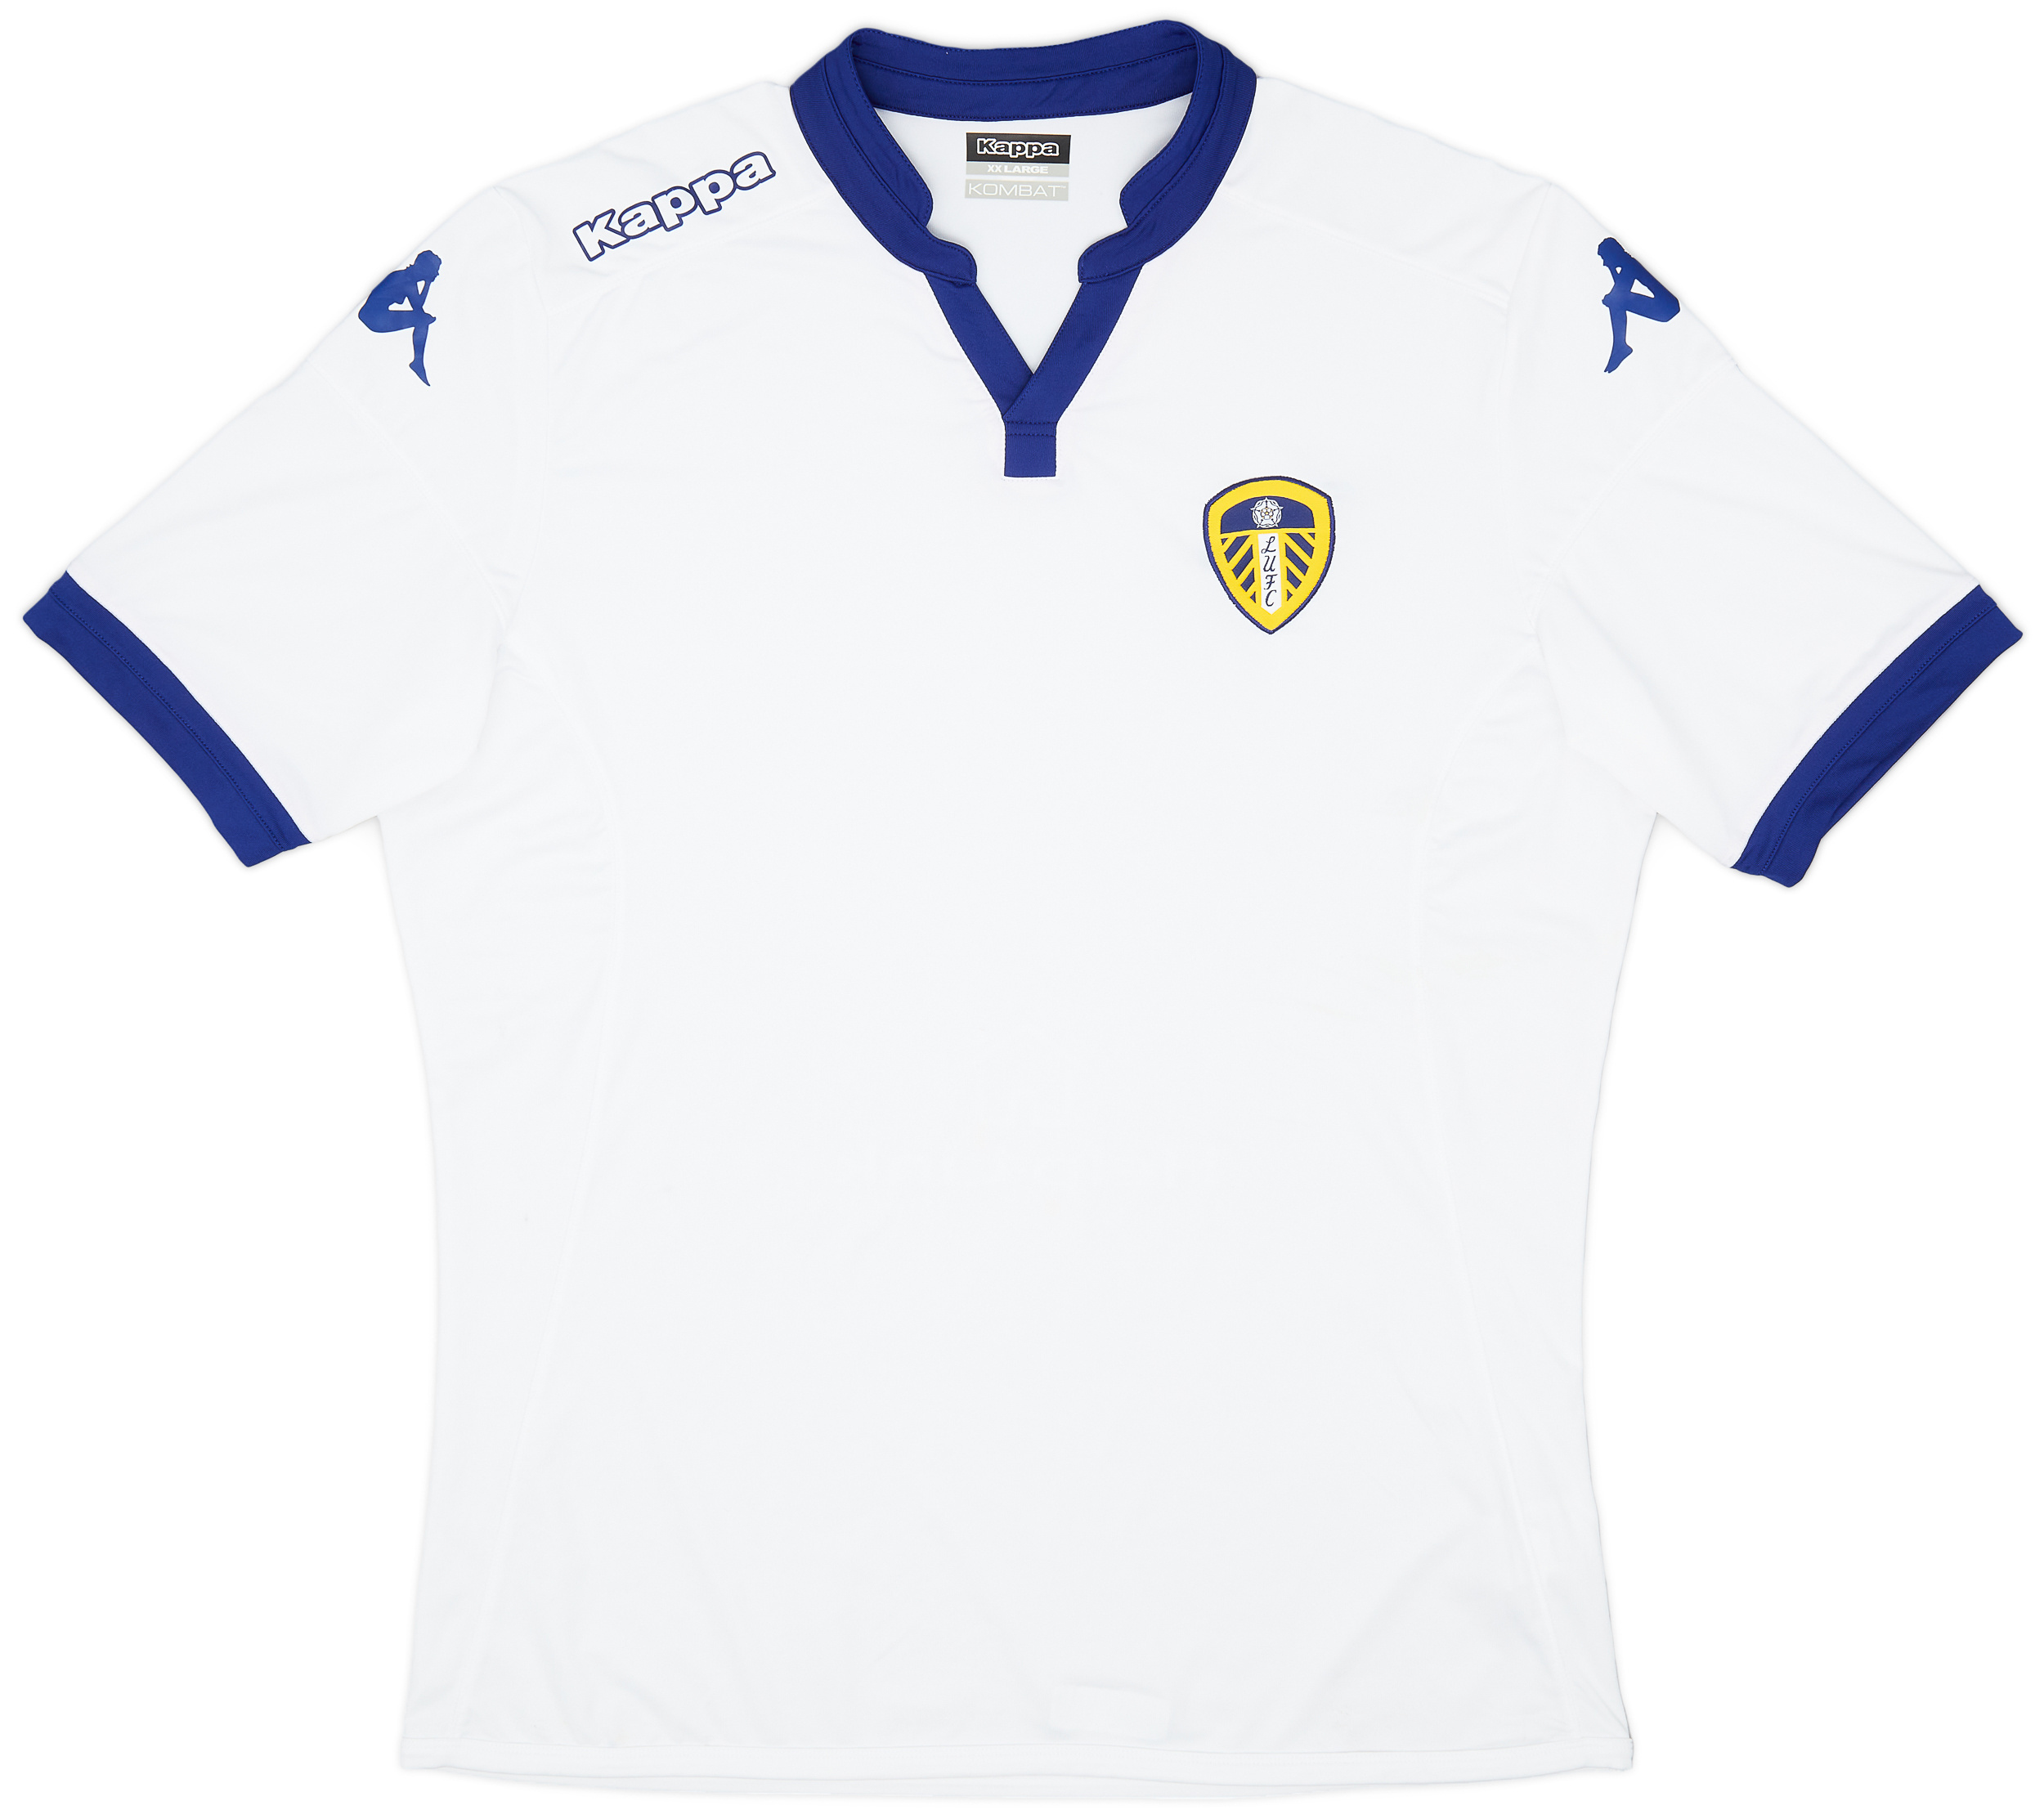 2015-16 Leeds United Home Shirt - 8/10 - ()